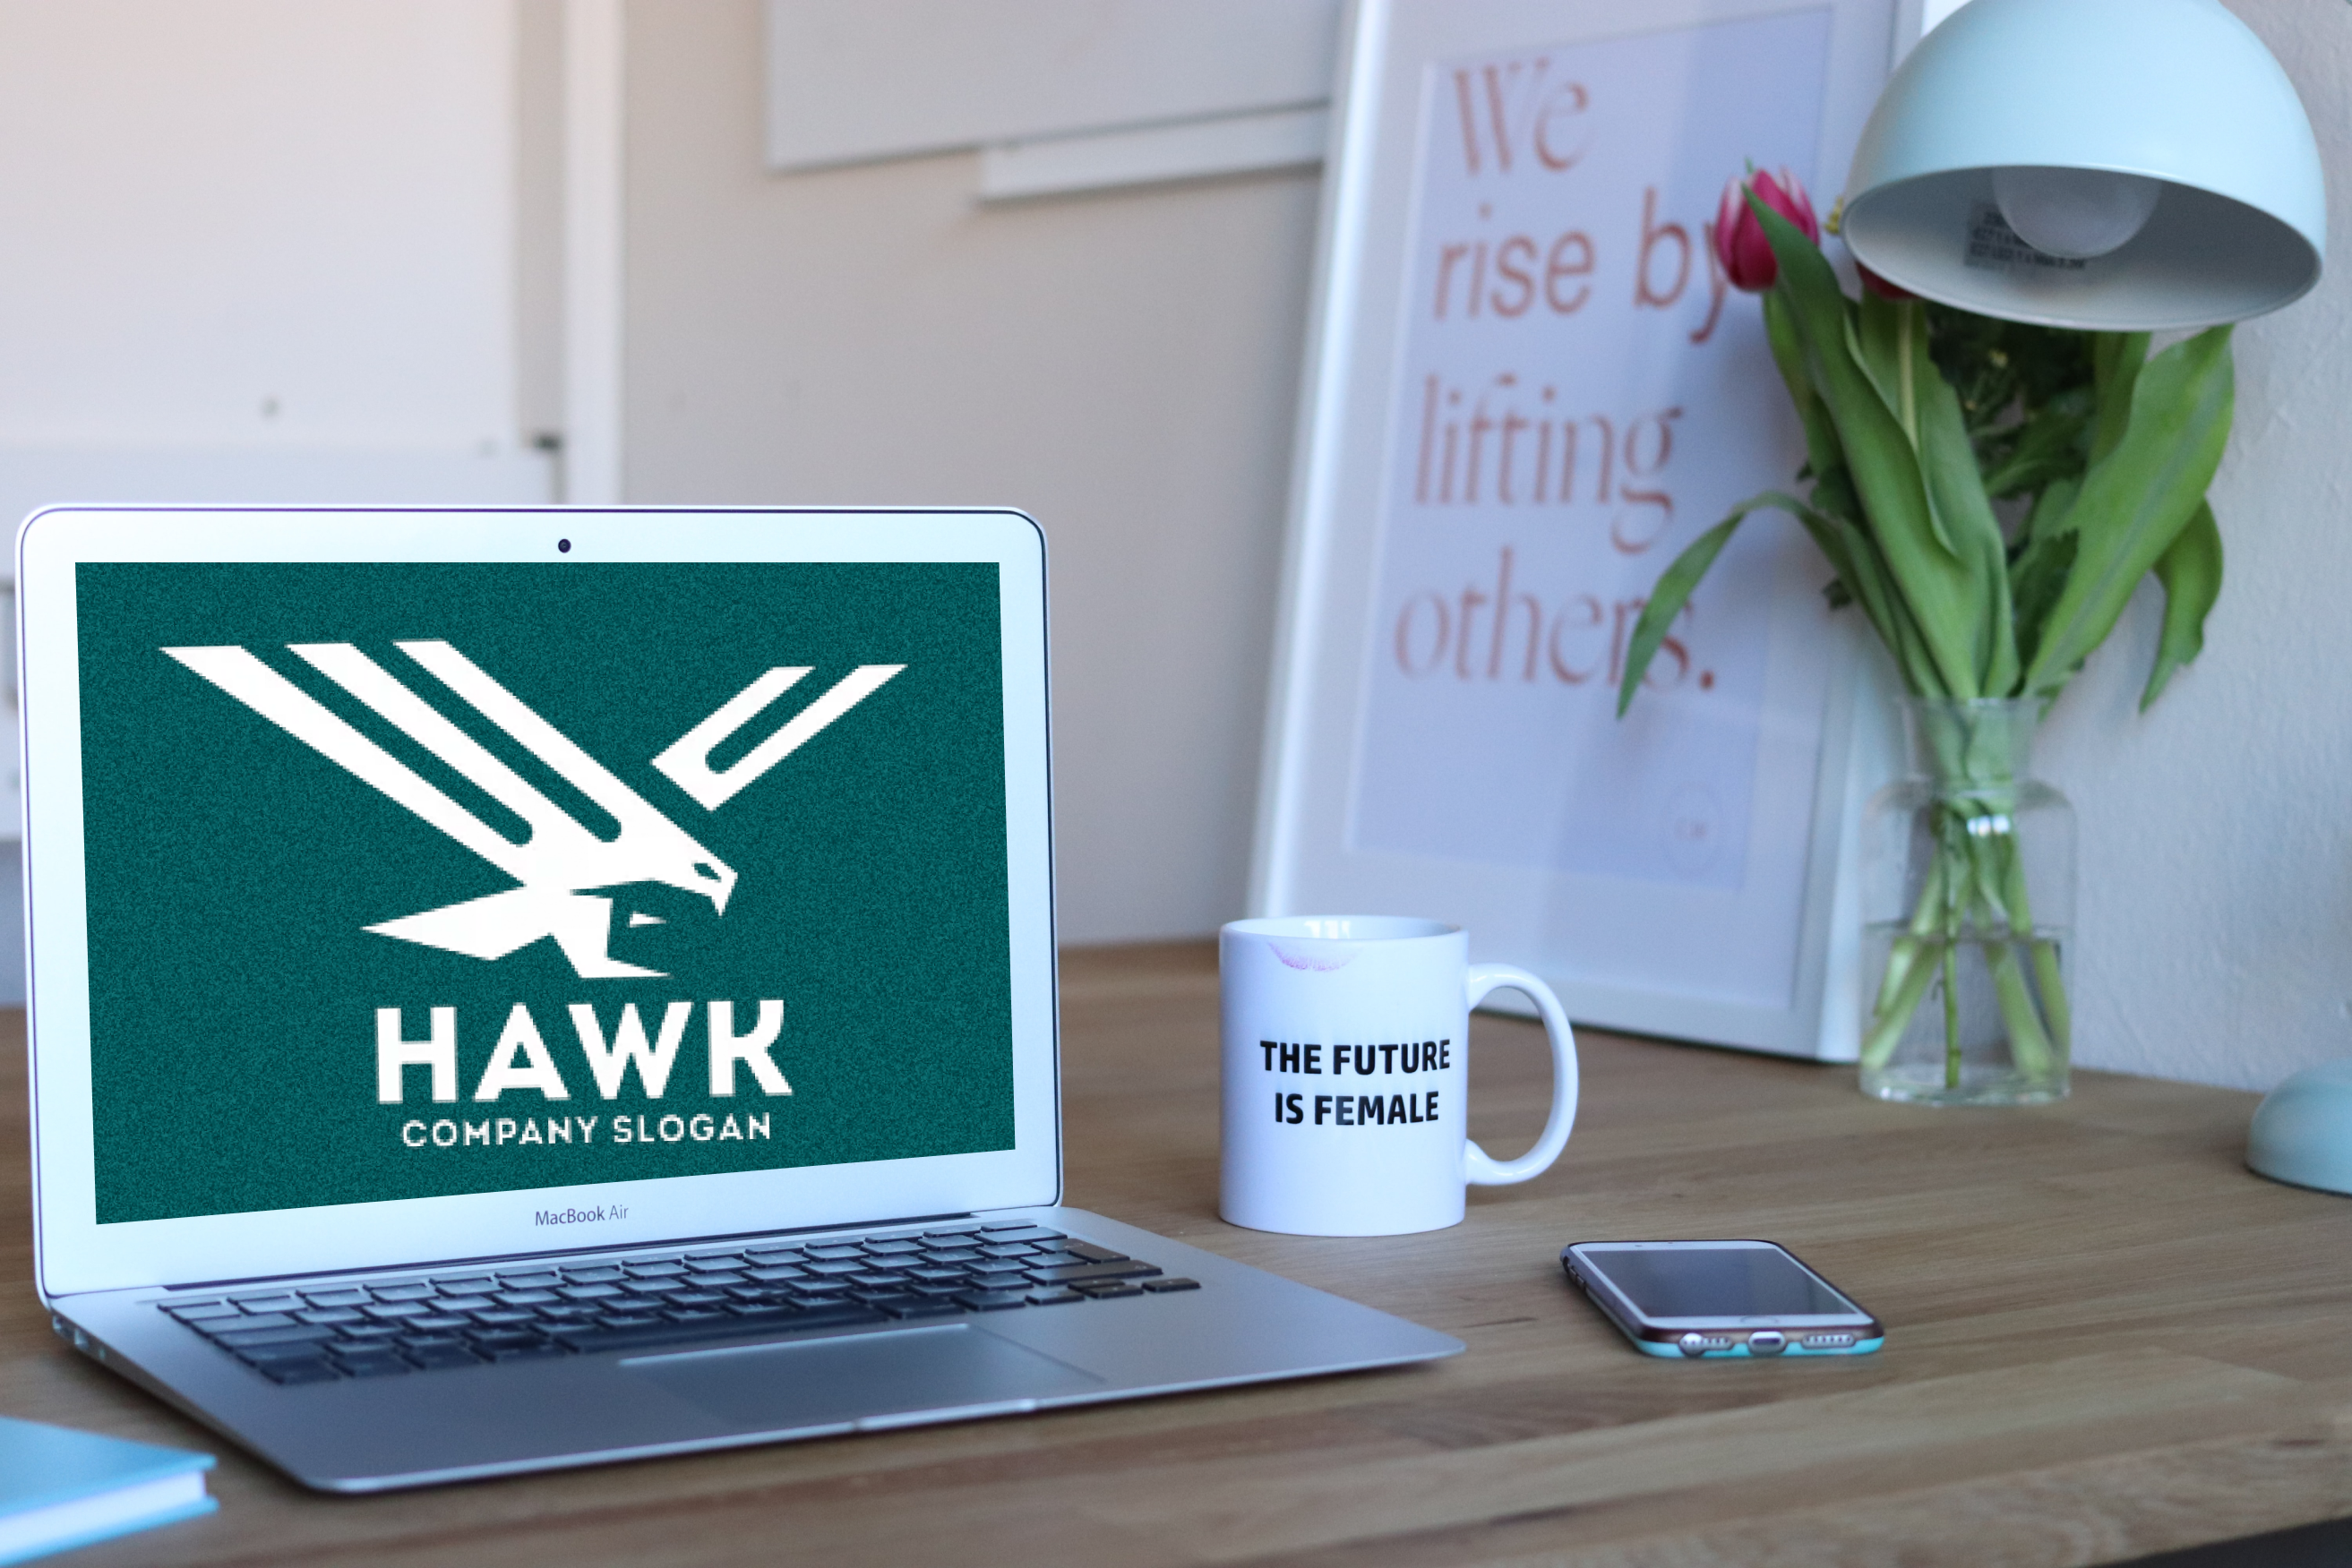 Wing hawk concept design on laptop.